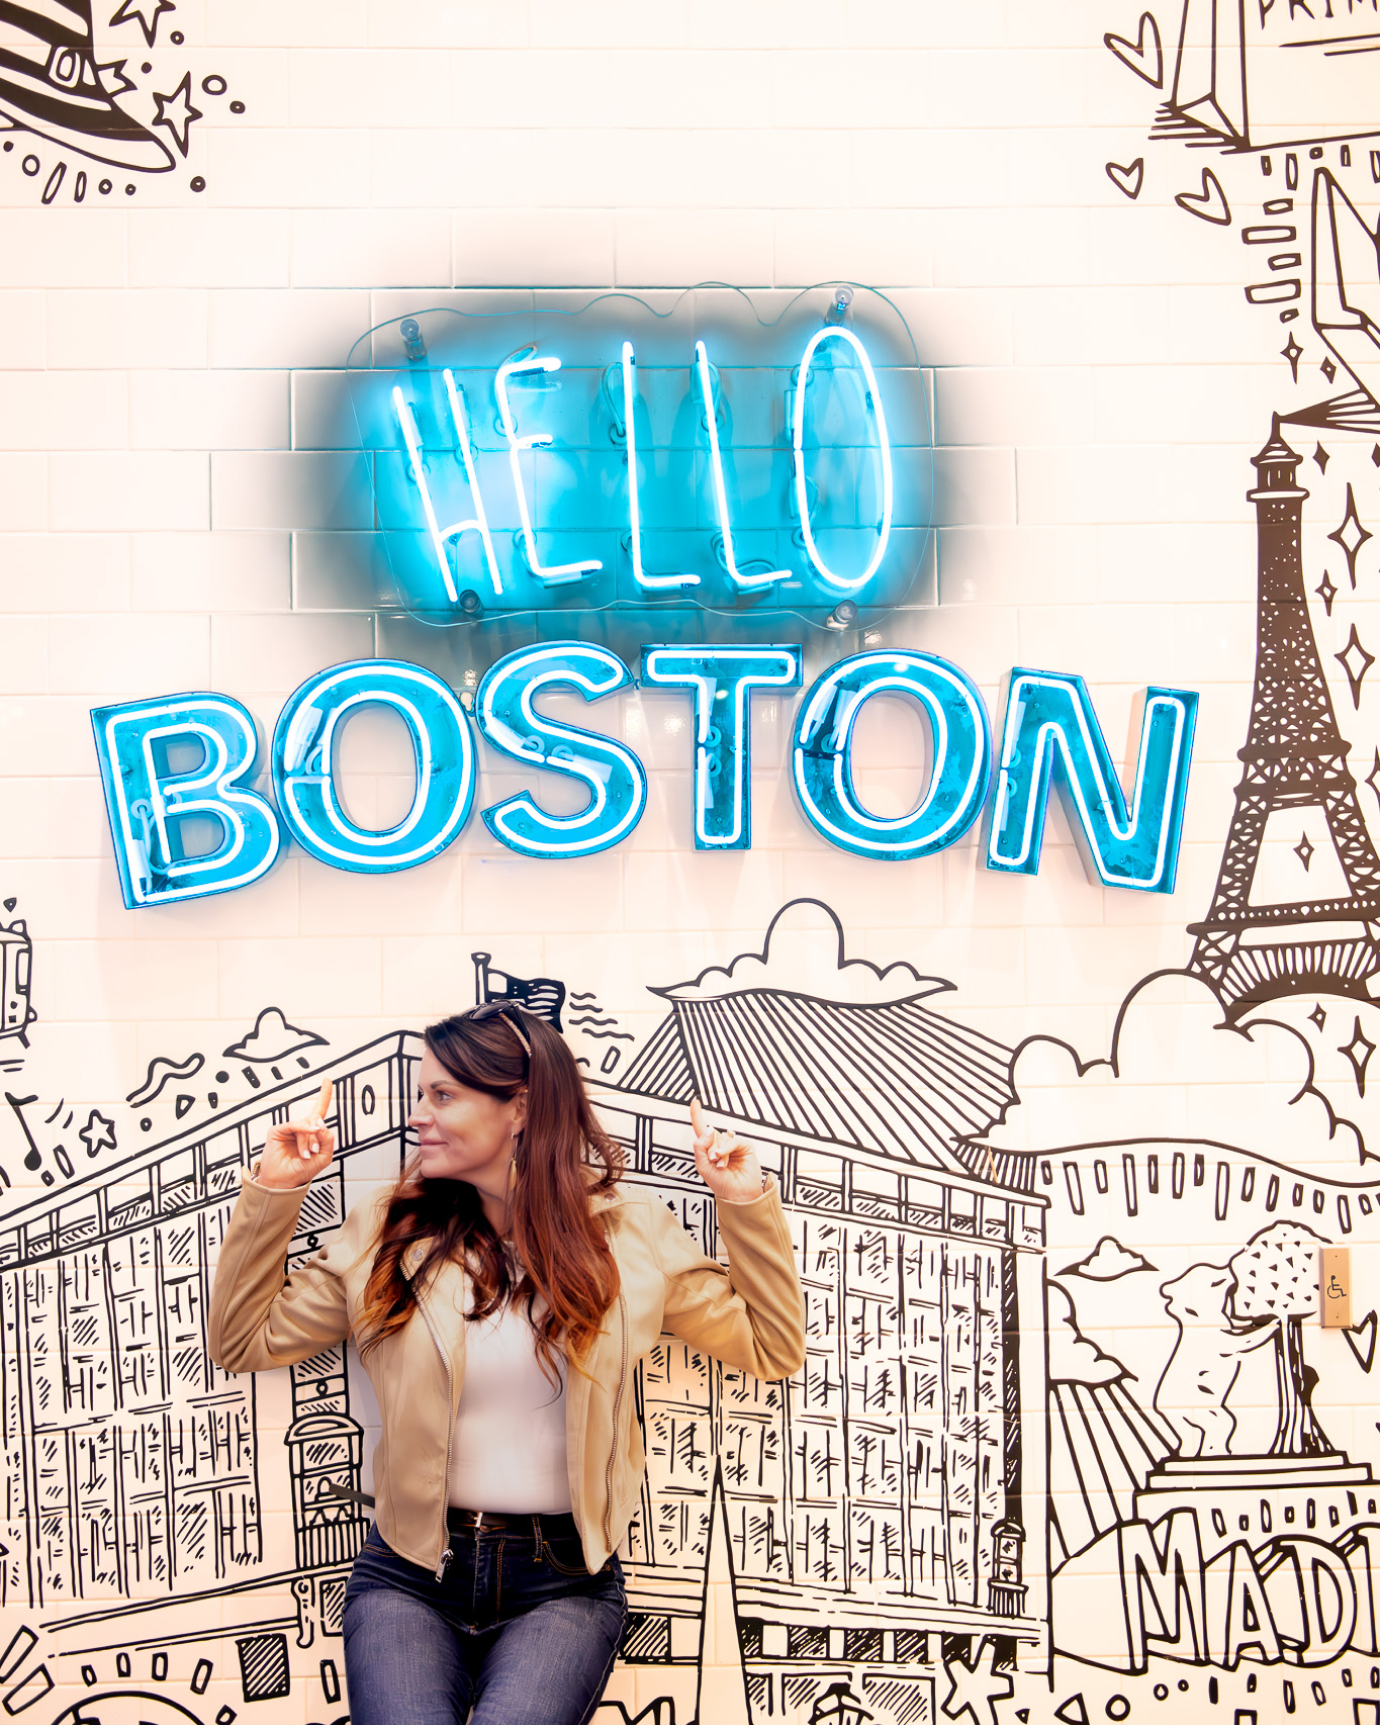 Casey's photo with "Hello, Boston" backdrop.